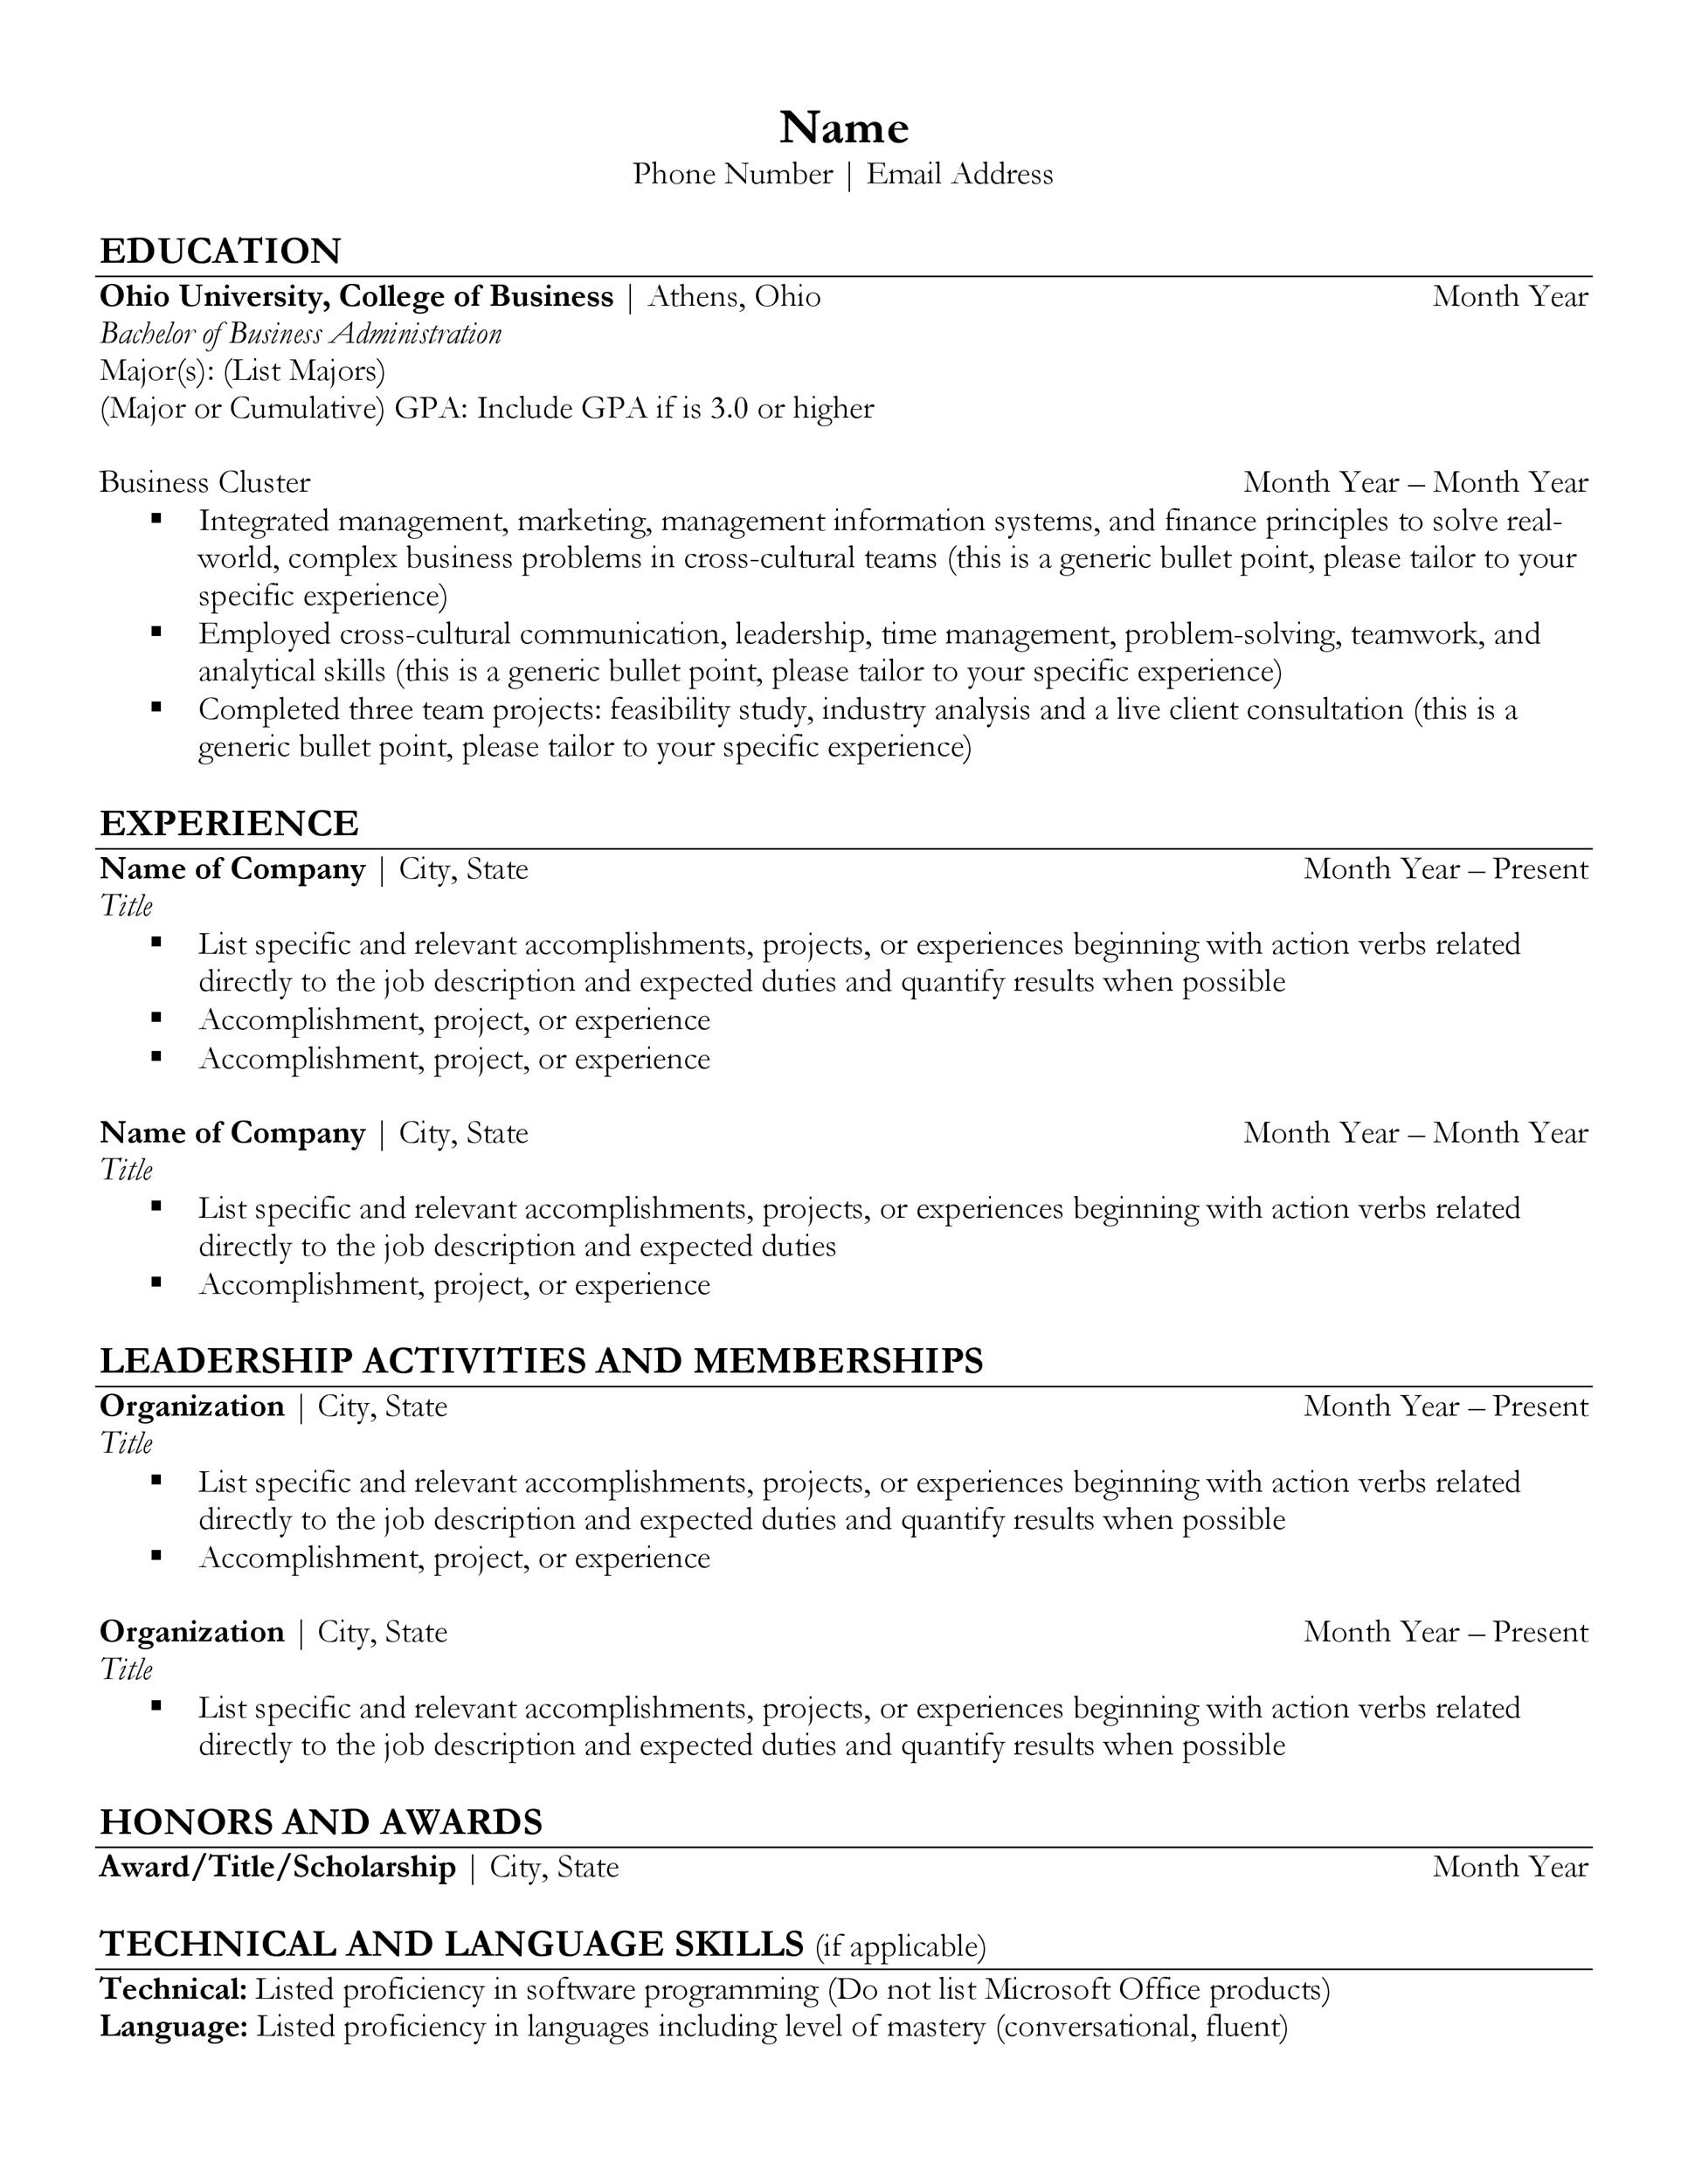 undergraduate-resume-examples-for-students-riset